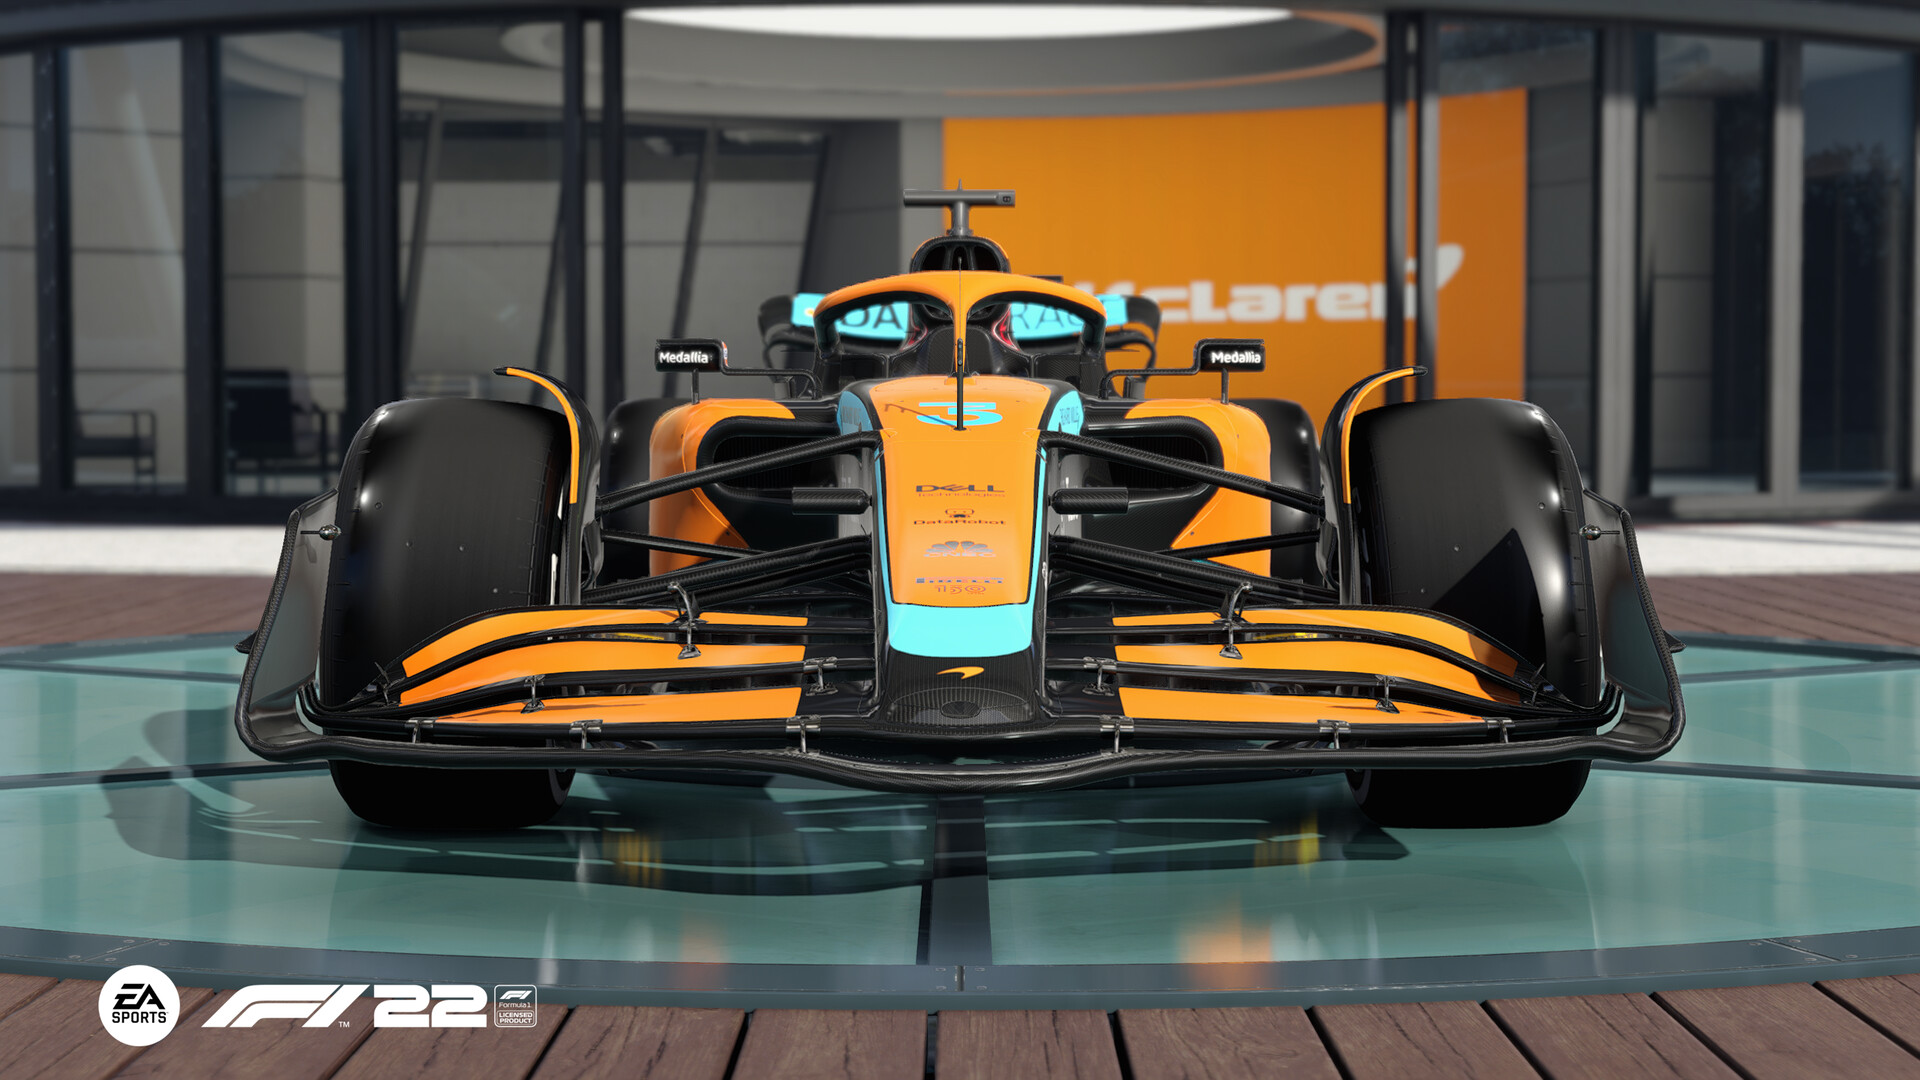 F1 22] 22 GoodSmile Racing F1 Concept Mod 02 by jburon72 on DeviantArt